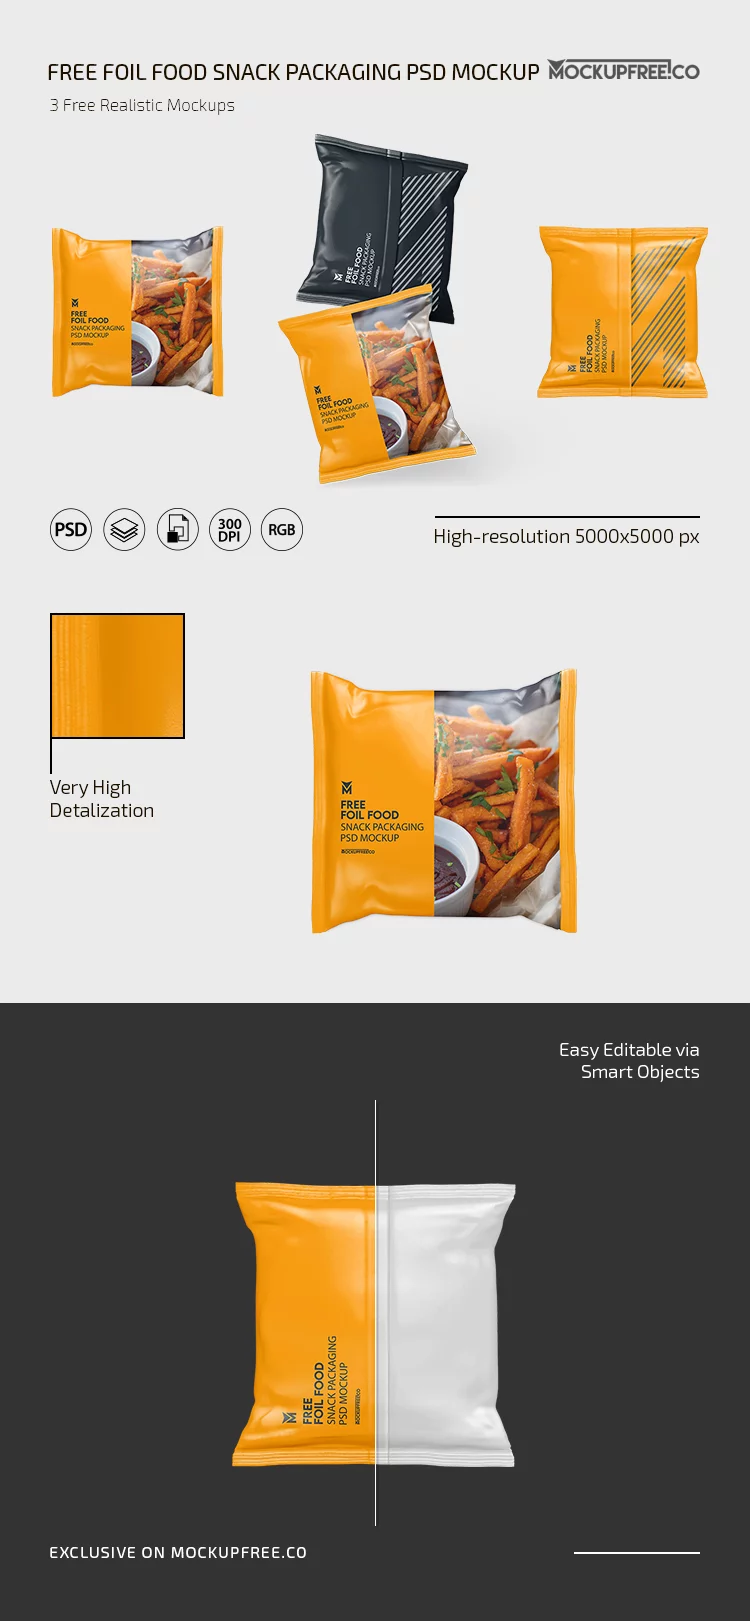 Free Foil Food Snack Packaging PSD Mockup